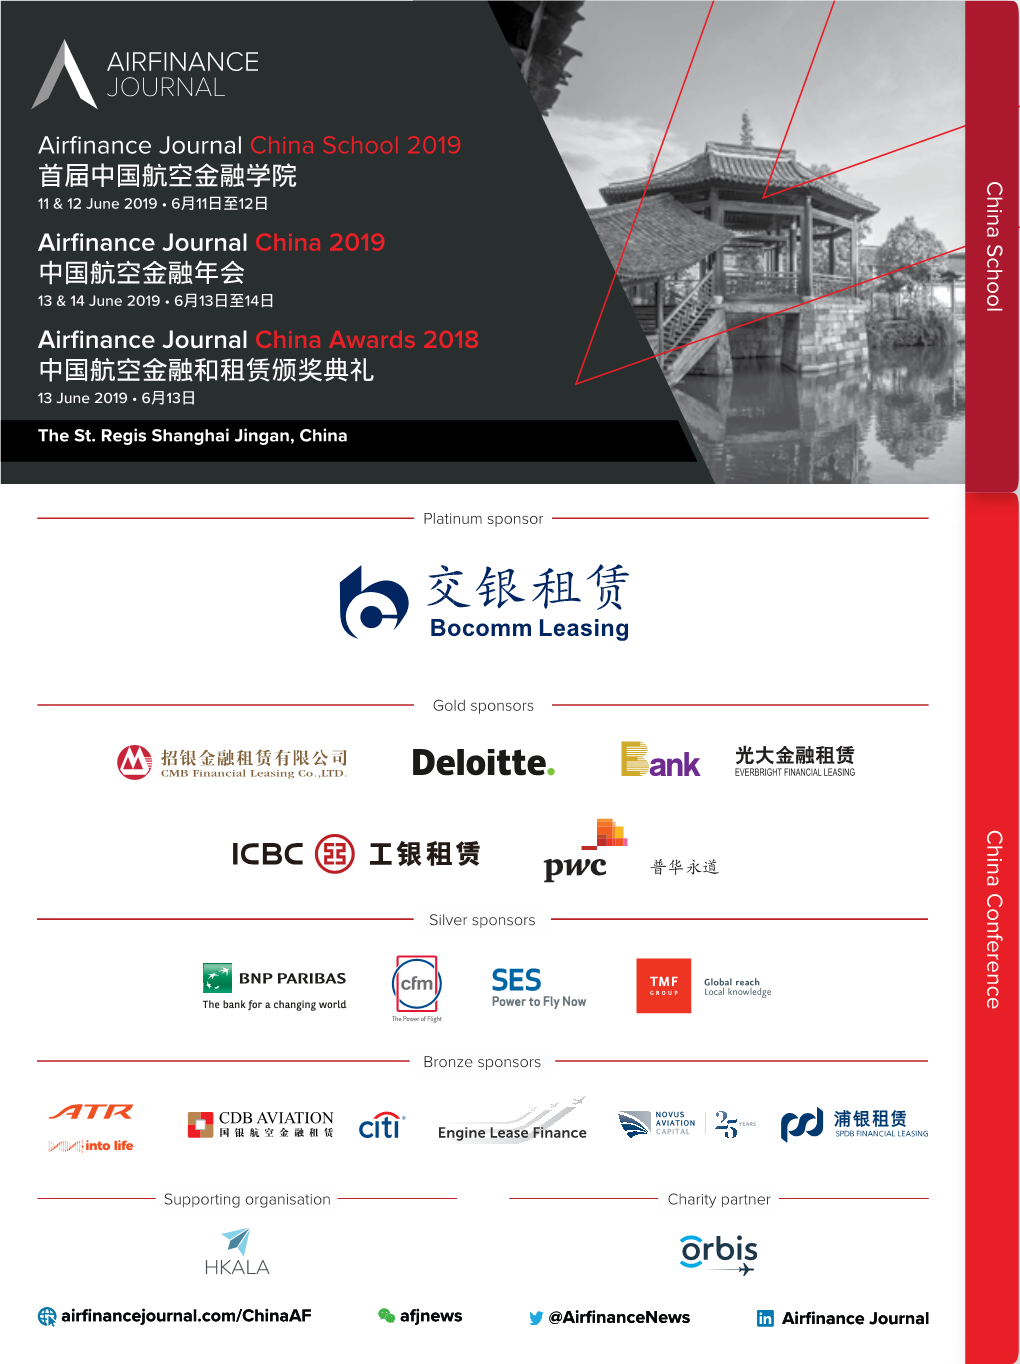 Airfinance Journal China School 2019